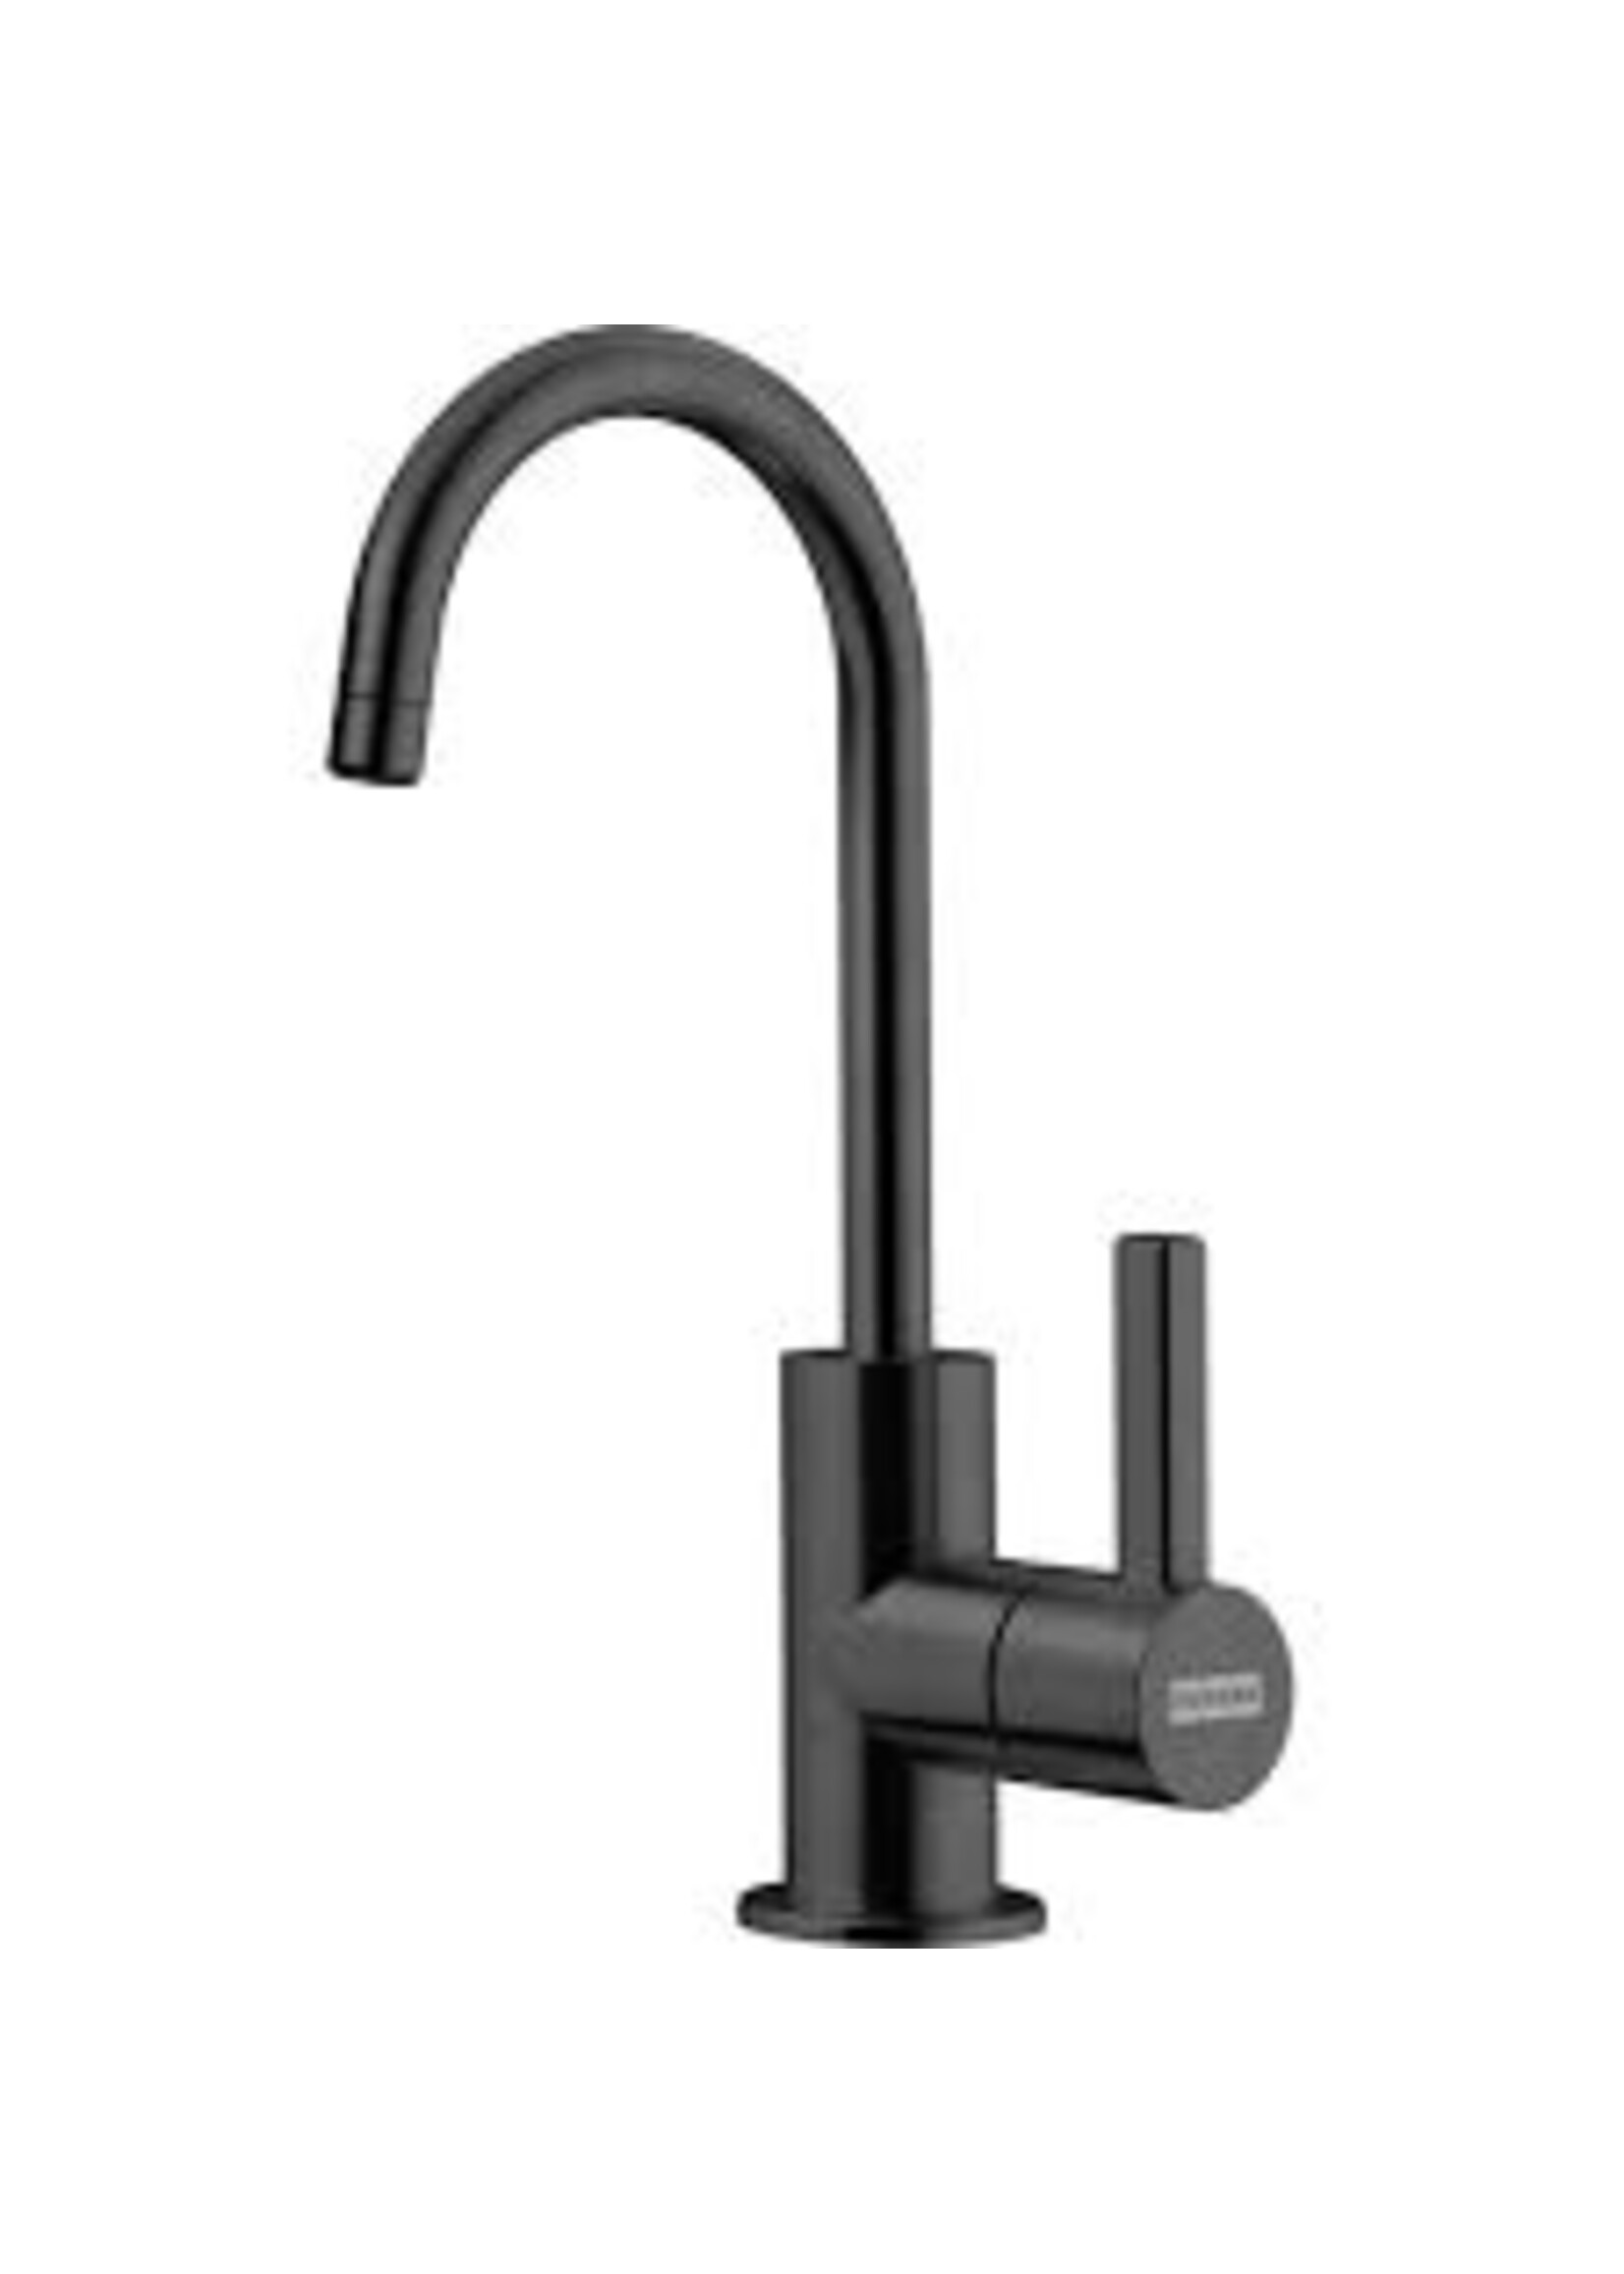 Franke Franke EOS Neo Cold Water Filter Faucet - Industrial Black